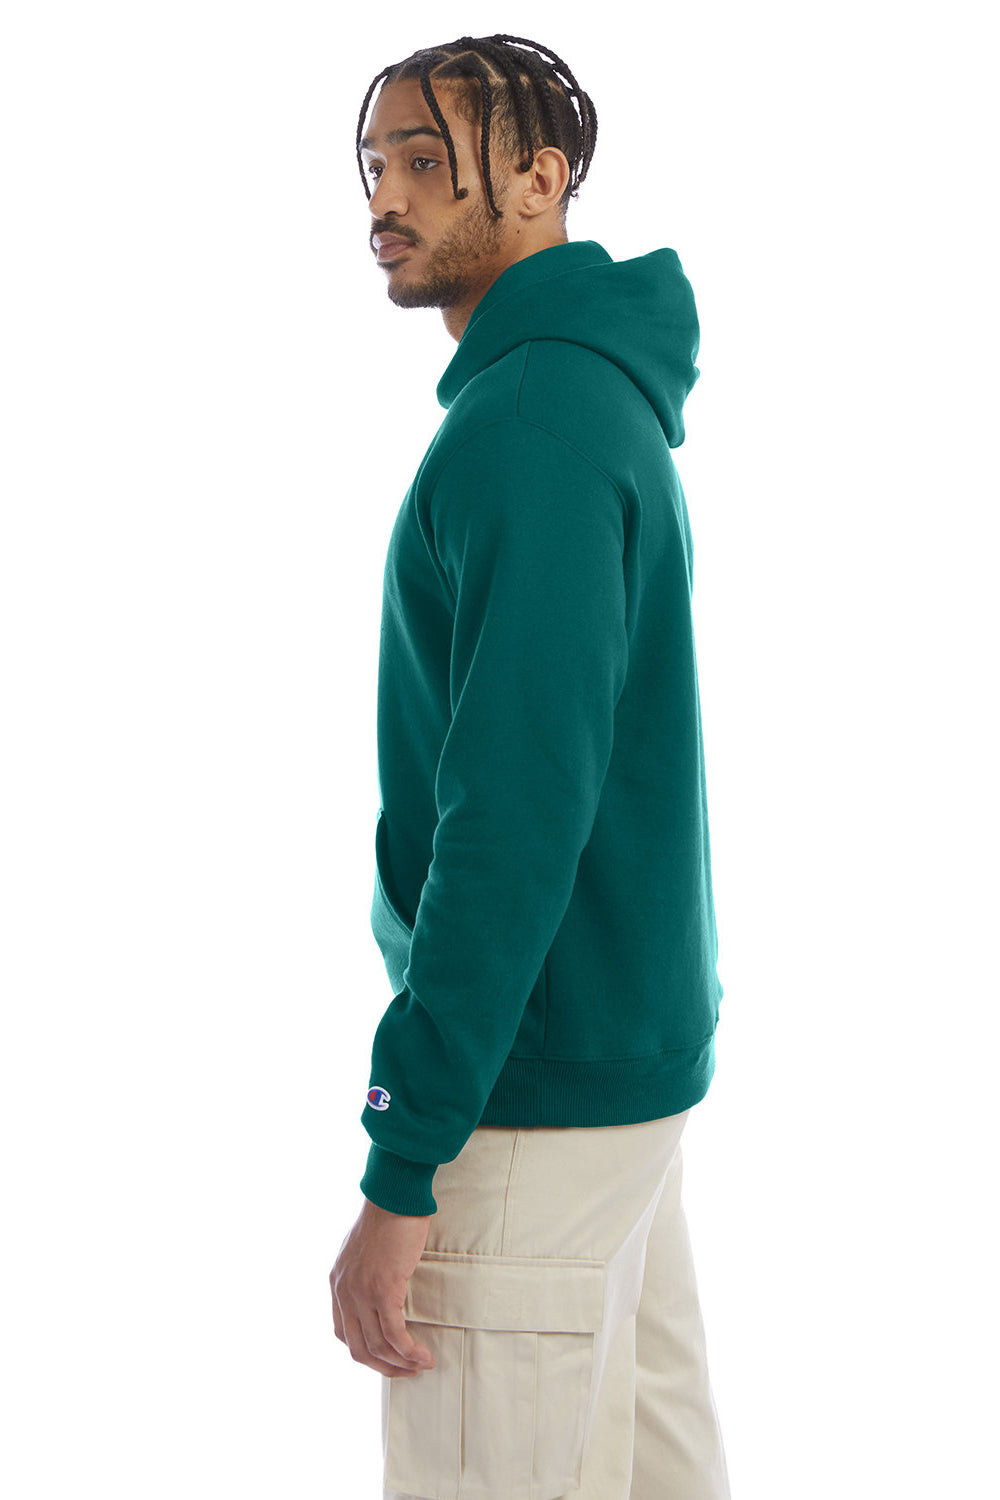 Champion S700 Mens Double Dry Eco Moisture Wicking Fleece Hooded Sweatshirt Hoodie Emerald Green SIde